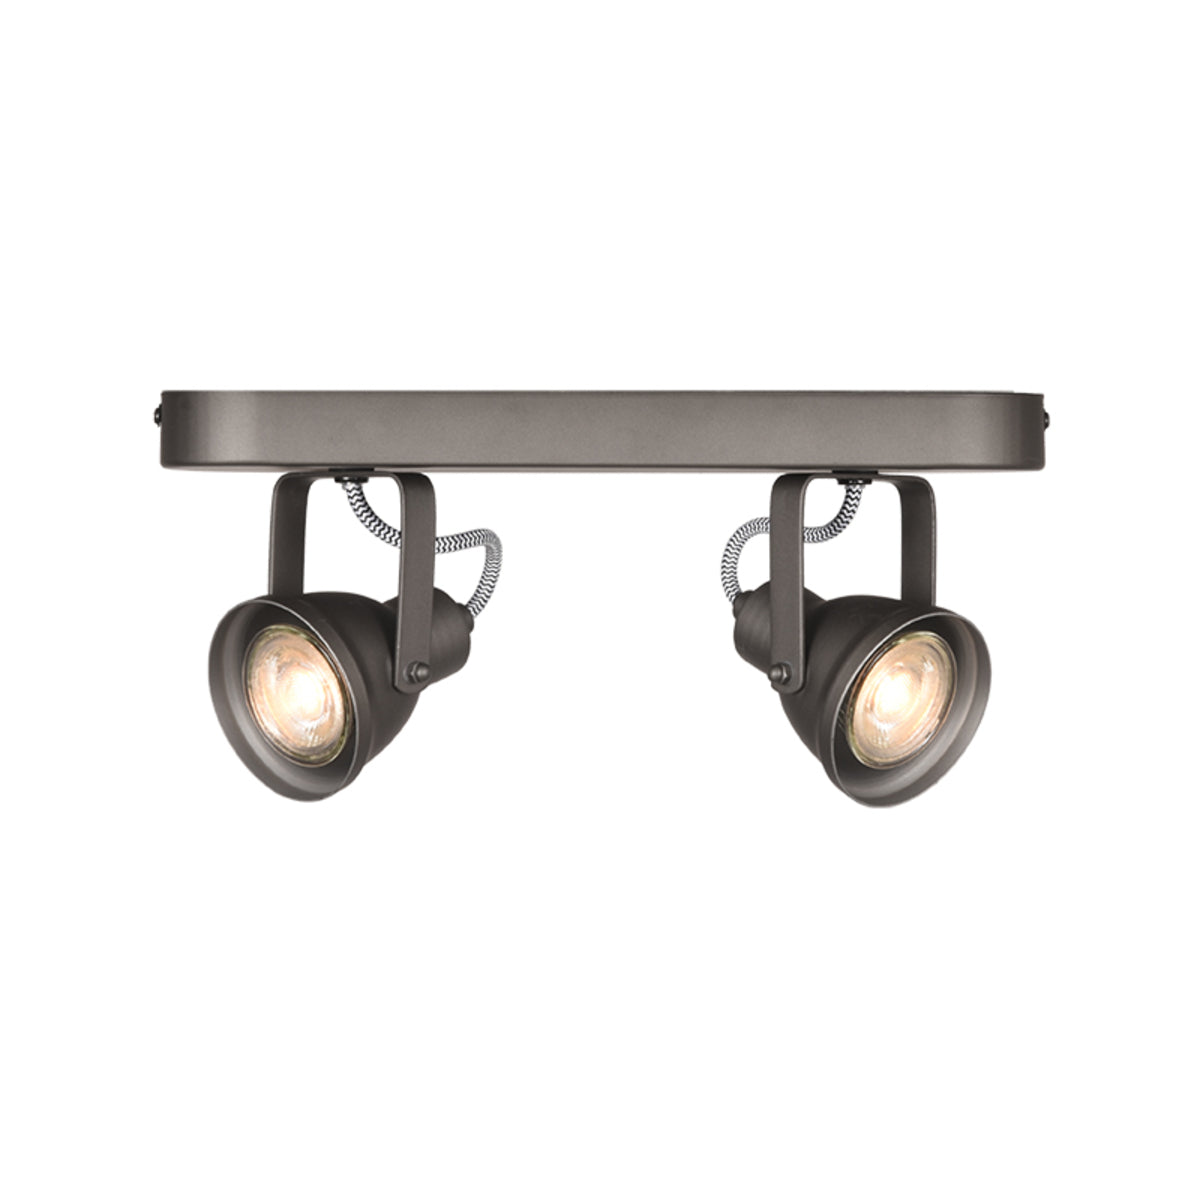 LABEL51 Spot Max LED - Gray - Metal - 2 Lights